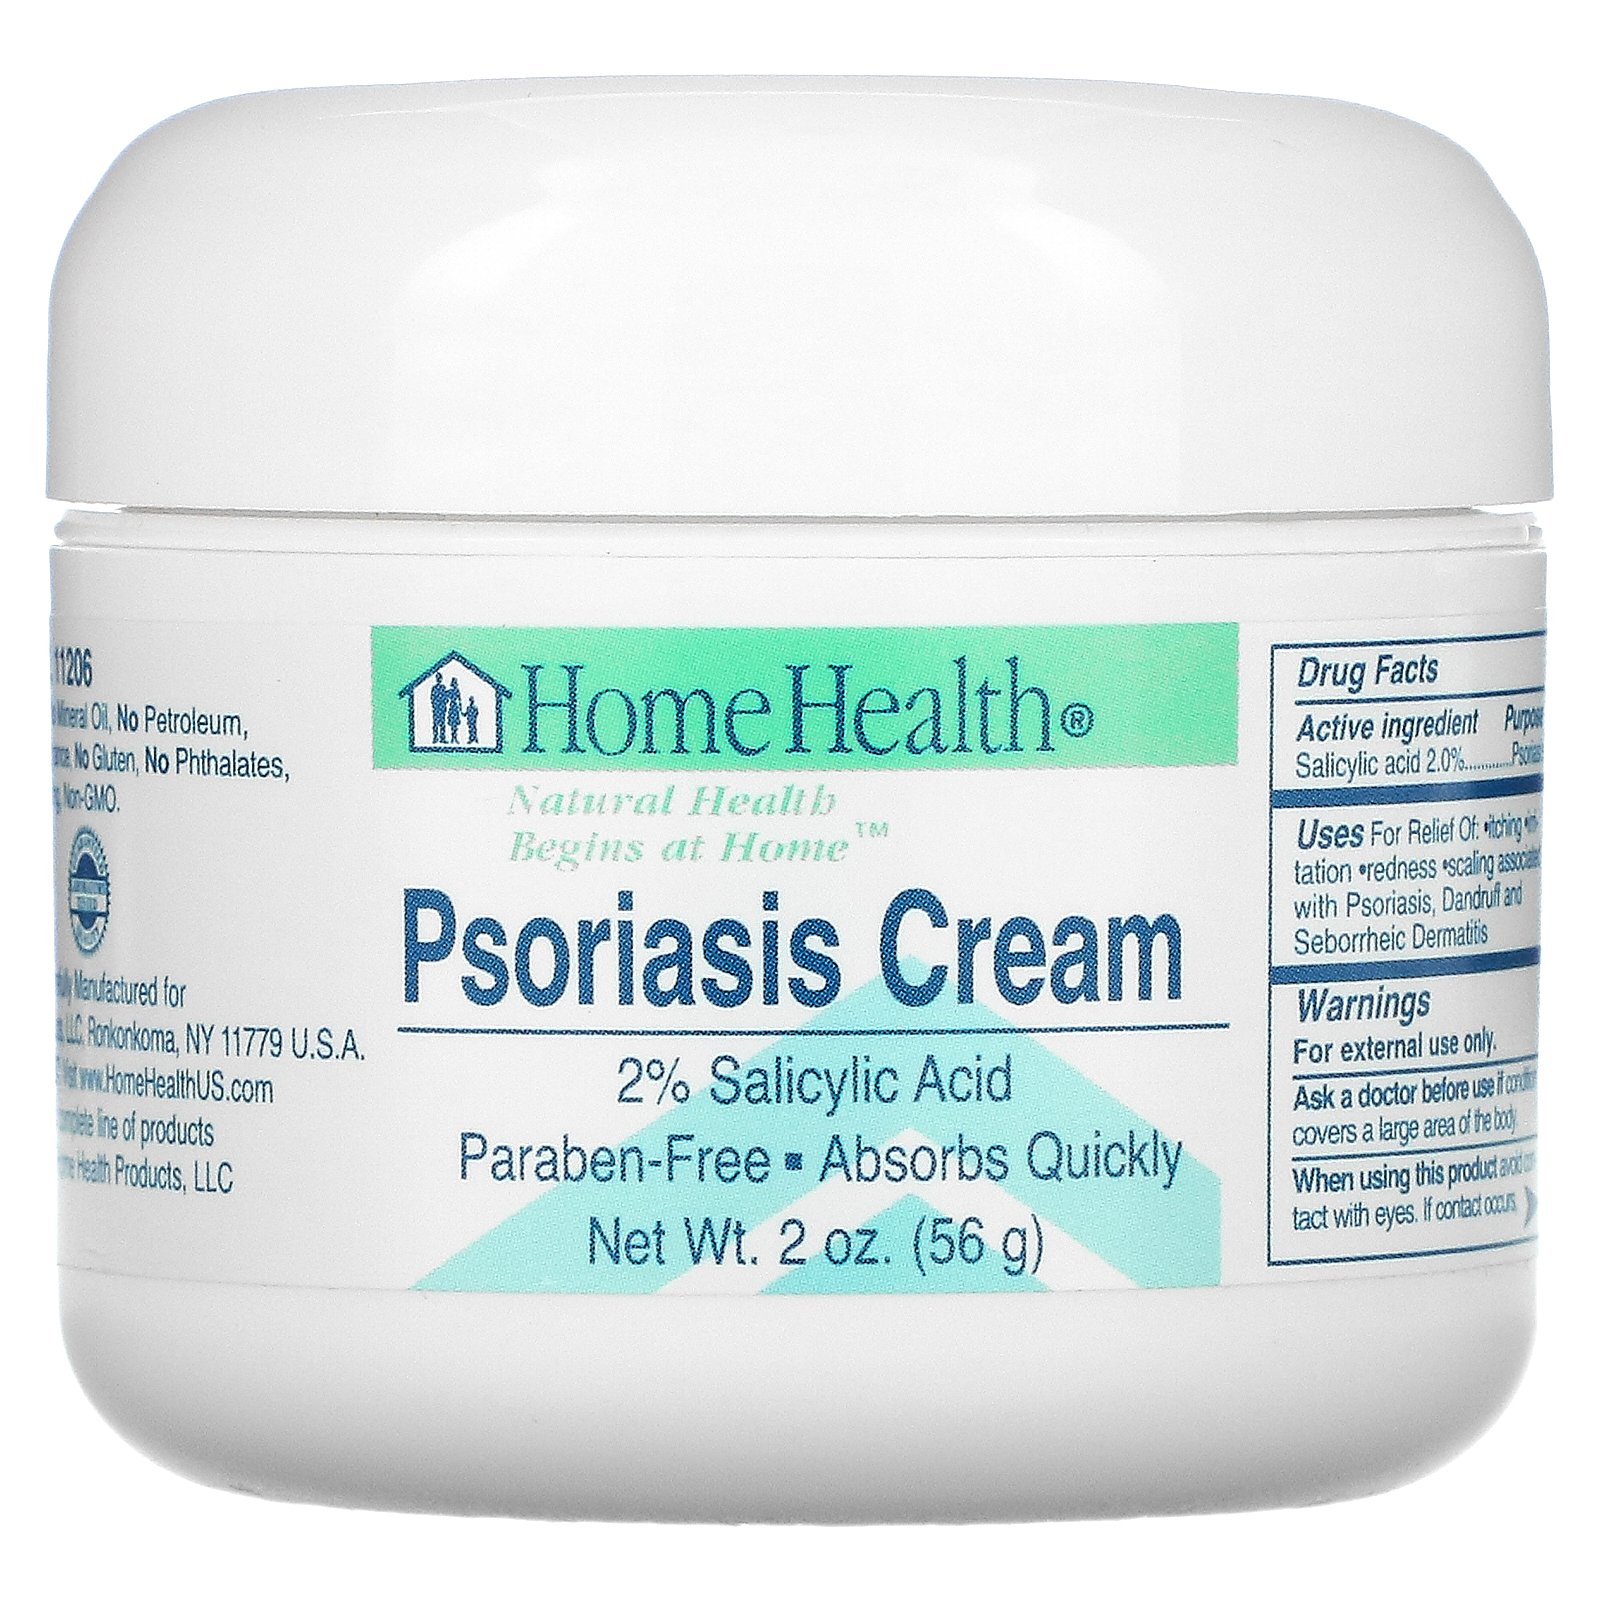 home health psoriasis cream купить минск